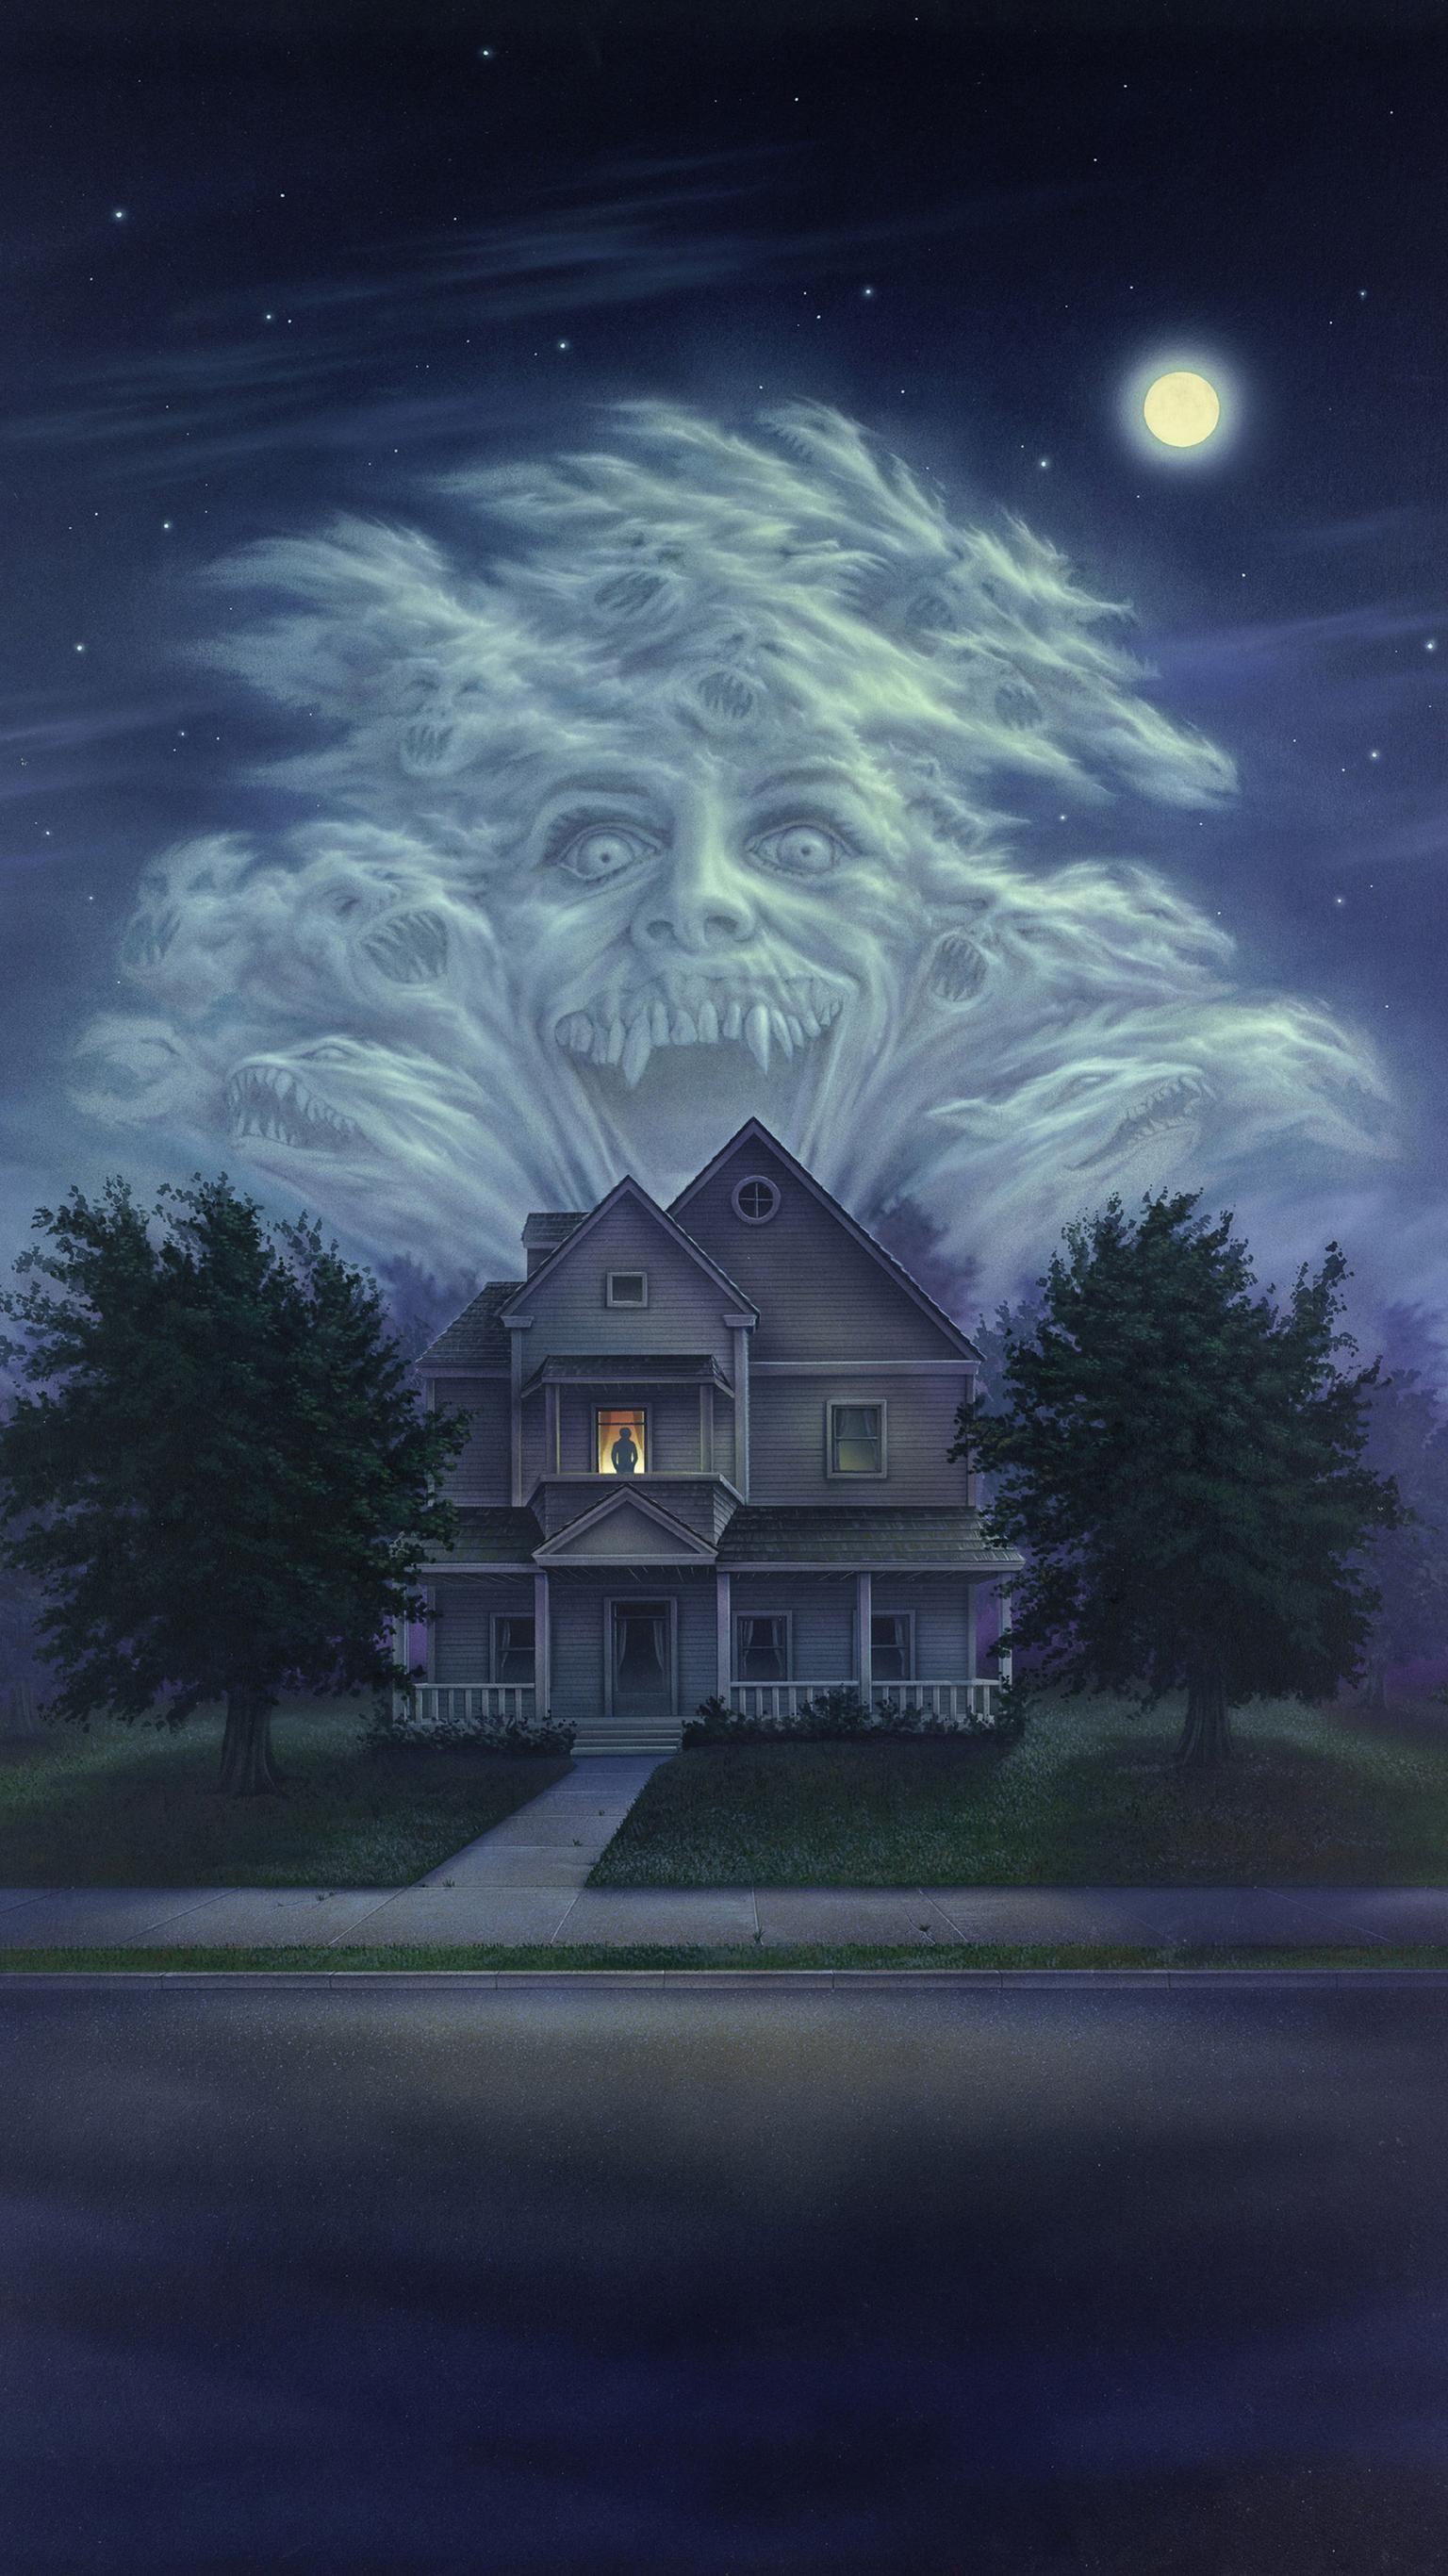 Halloween Phone Wallpaper. Moviemania. Scary wallpaper, Fright night, Horror movie posters